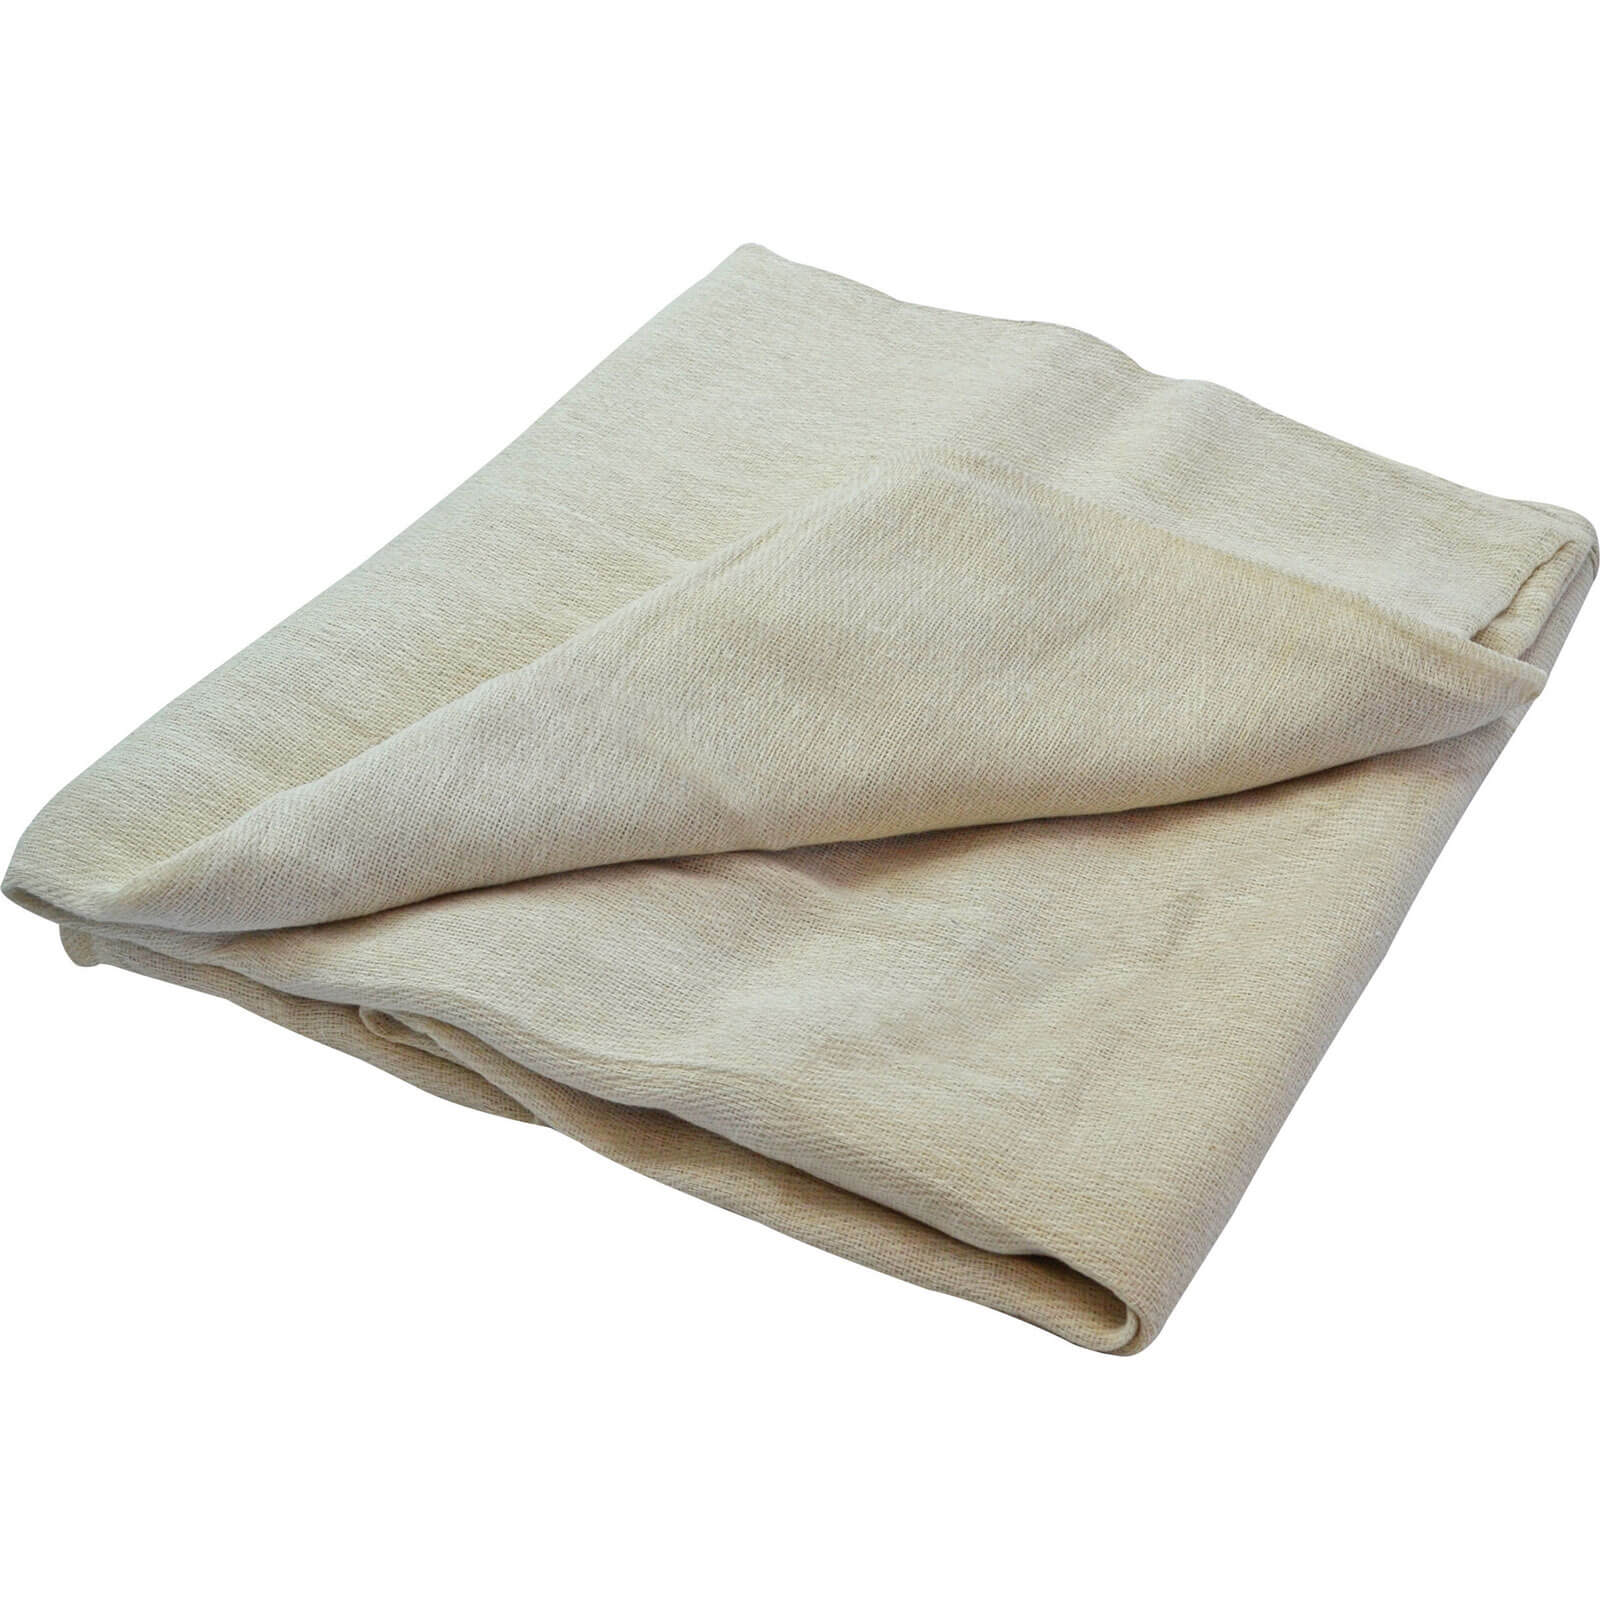 Image of Faithfull Cotton Twill Dust Sheet 3.5m 2.6m Pack of 1